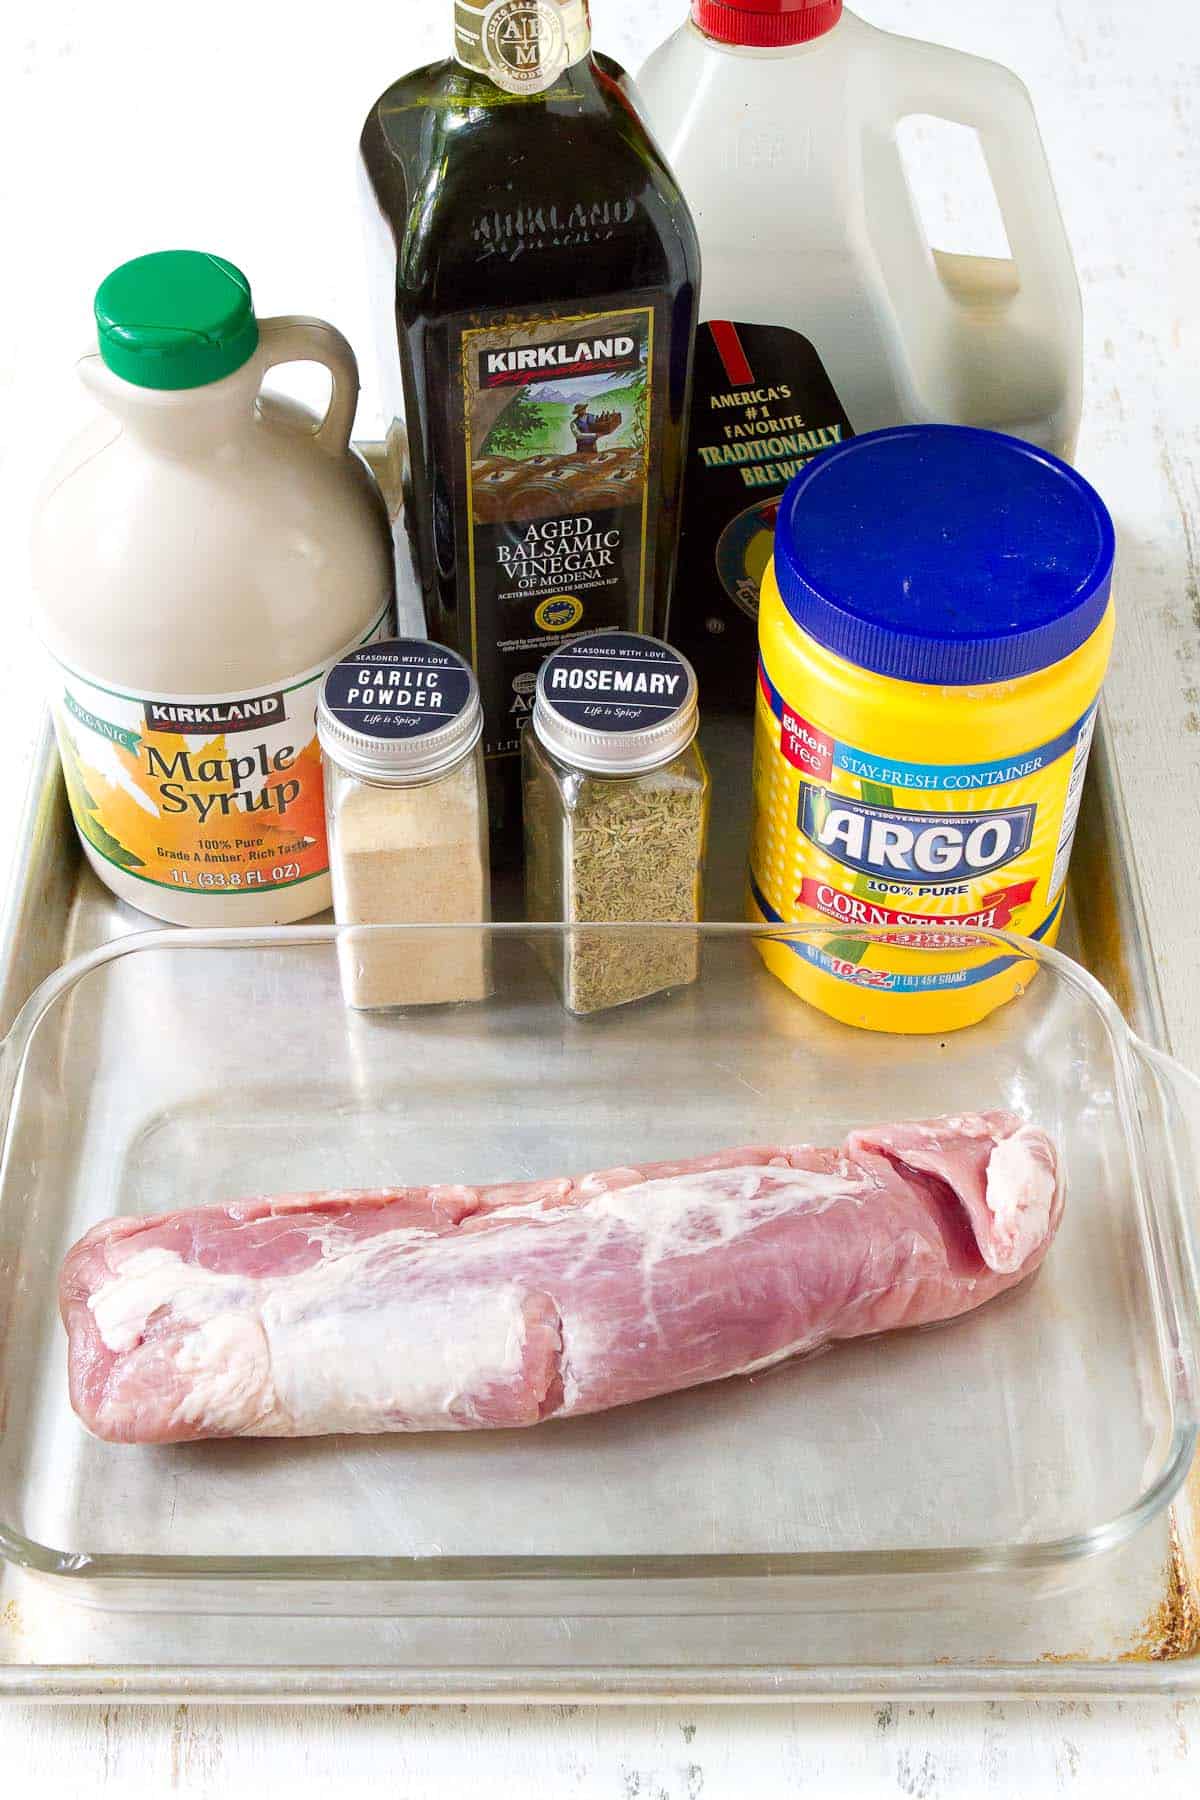 Ingredients for roasted pork tenderloin recipe on a baking sheet.